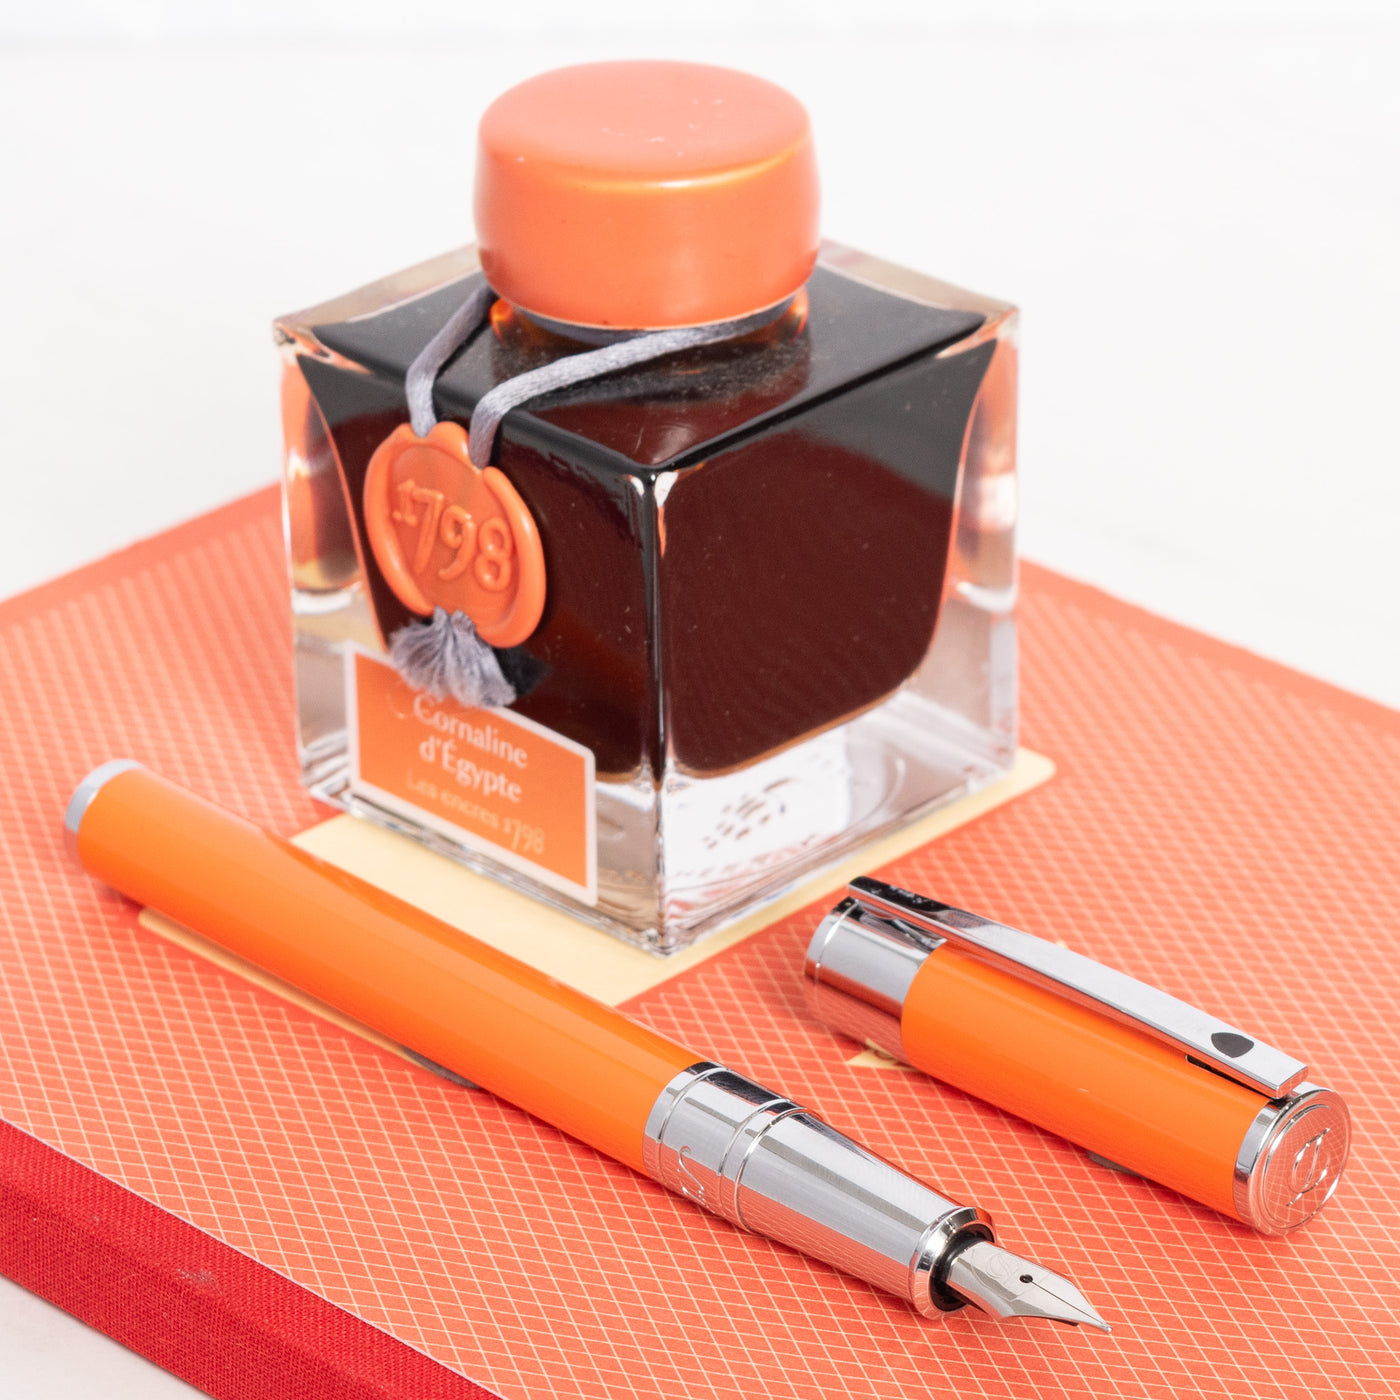 ST Dupont D Initial Orange & Chrome Fountain Pen new